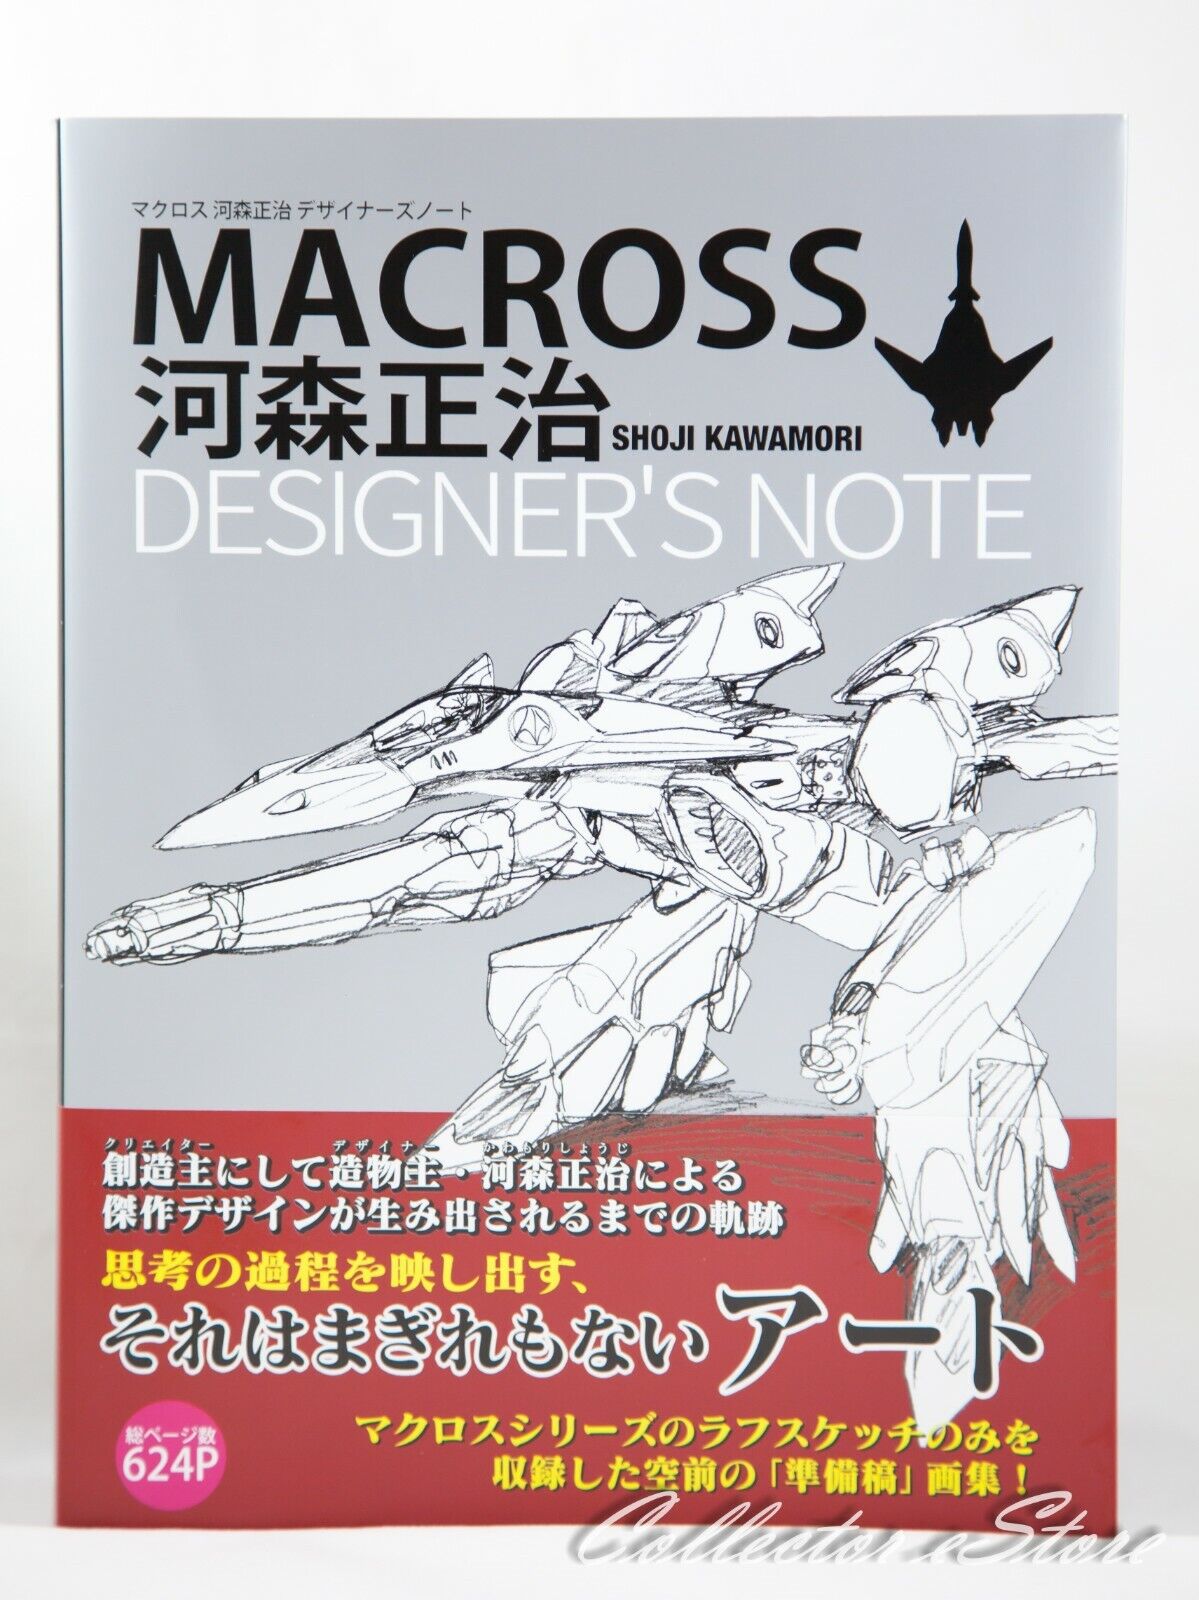 Macross Shoji Kawamori Designer\'s Note Art Book (FedEx/DHL)